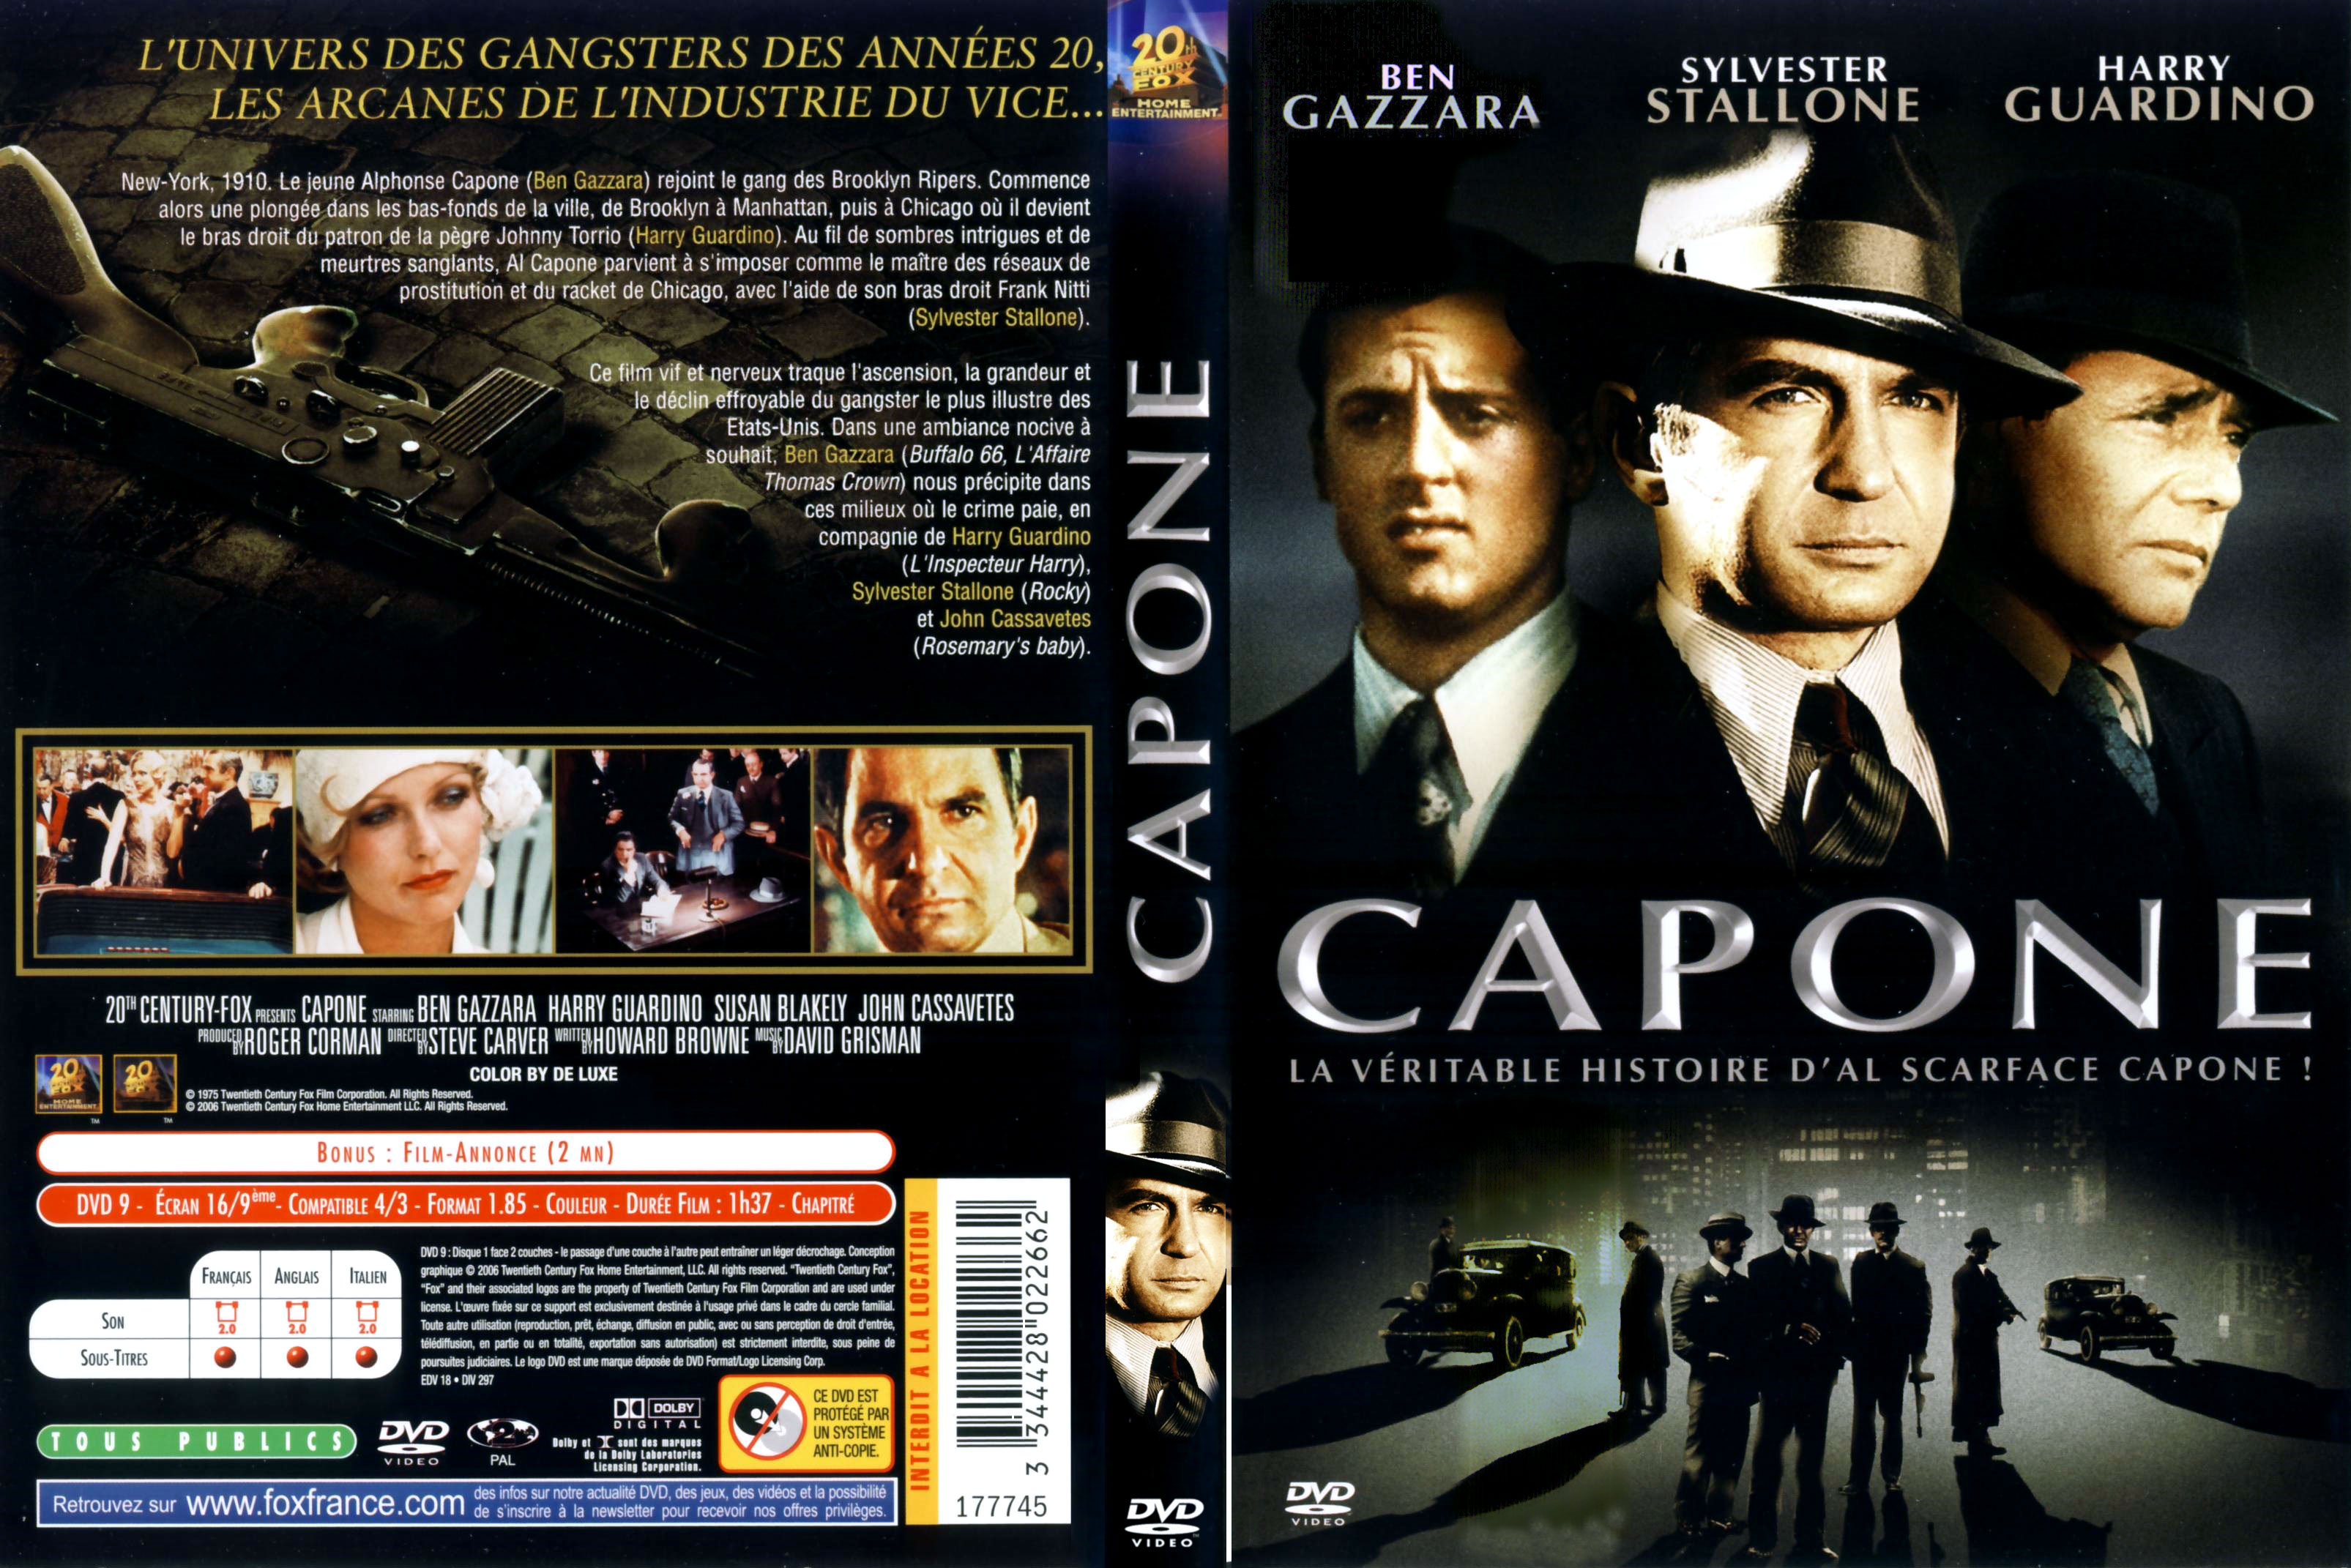 Jaquette DVD Capone v2